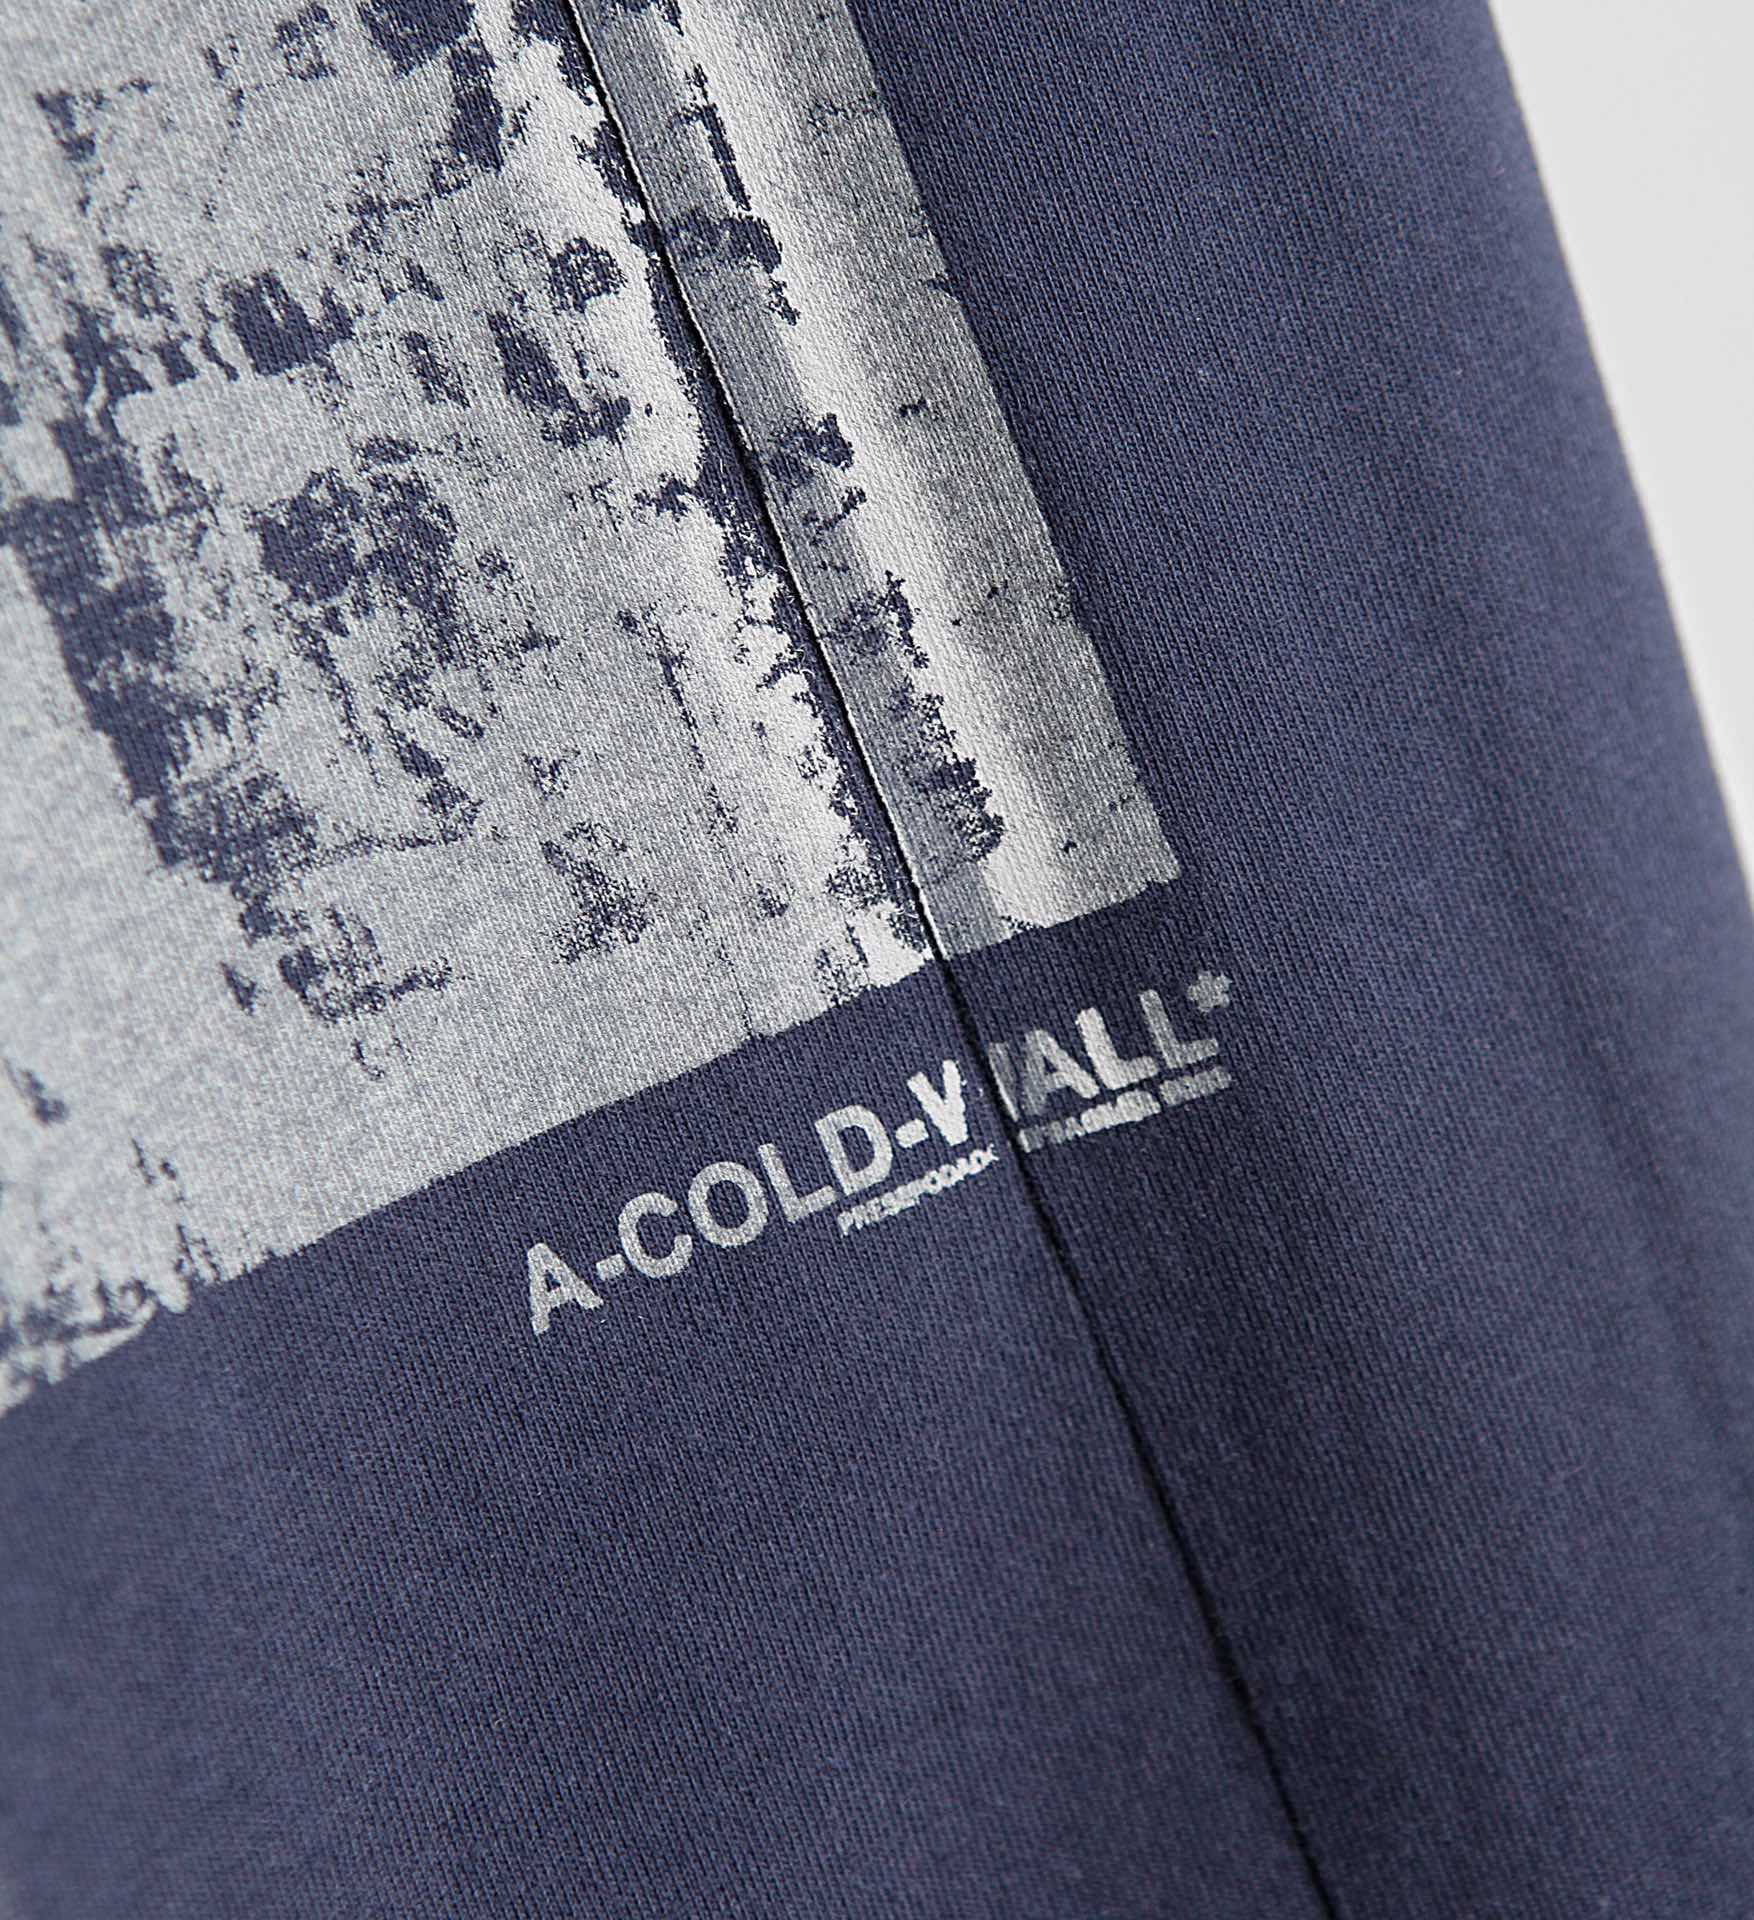 ACOLDWALL ザウォール 服偽物 トップス 短袖Tシャツ 純綿 シンプル ロゴプリント 2色可選 ブラック_8